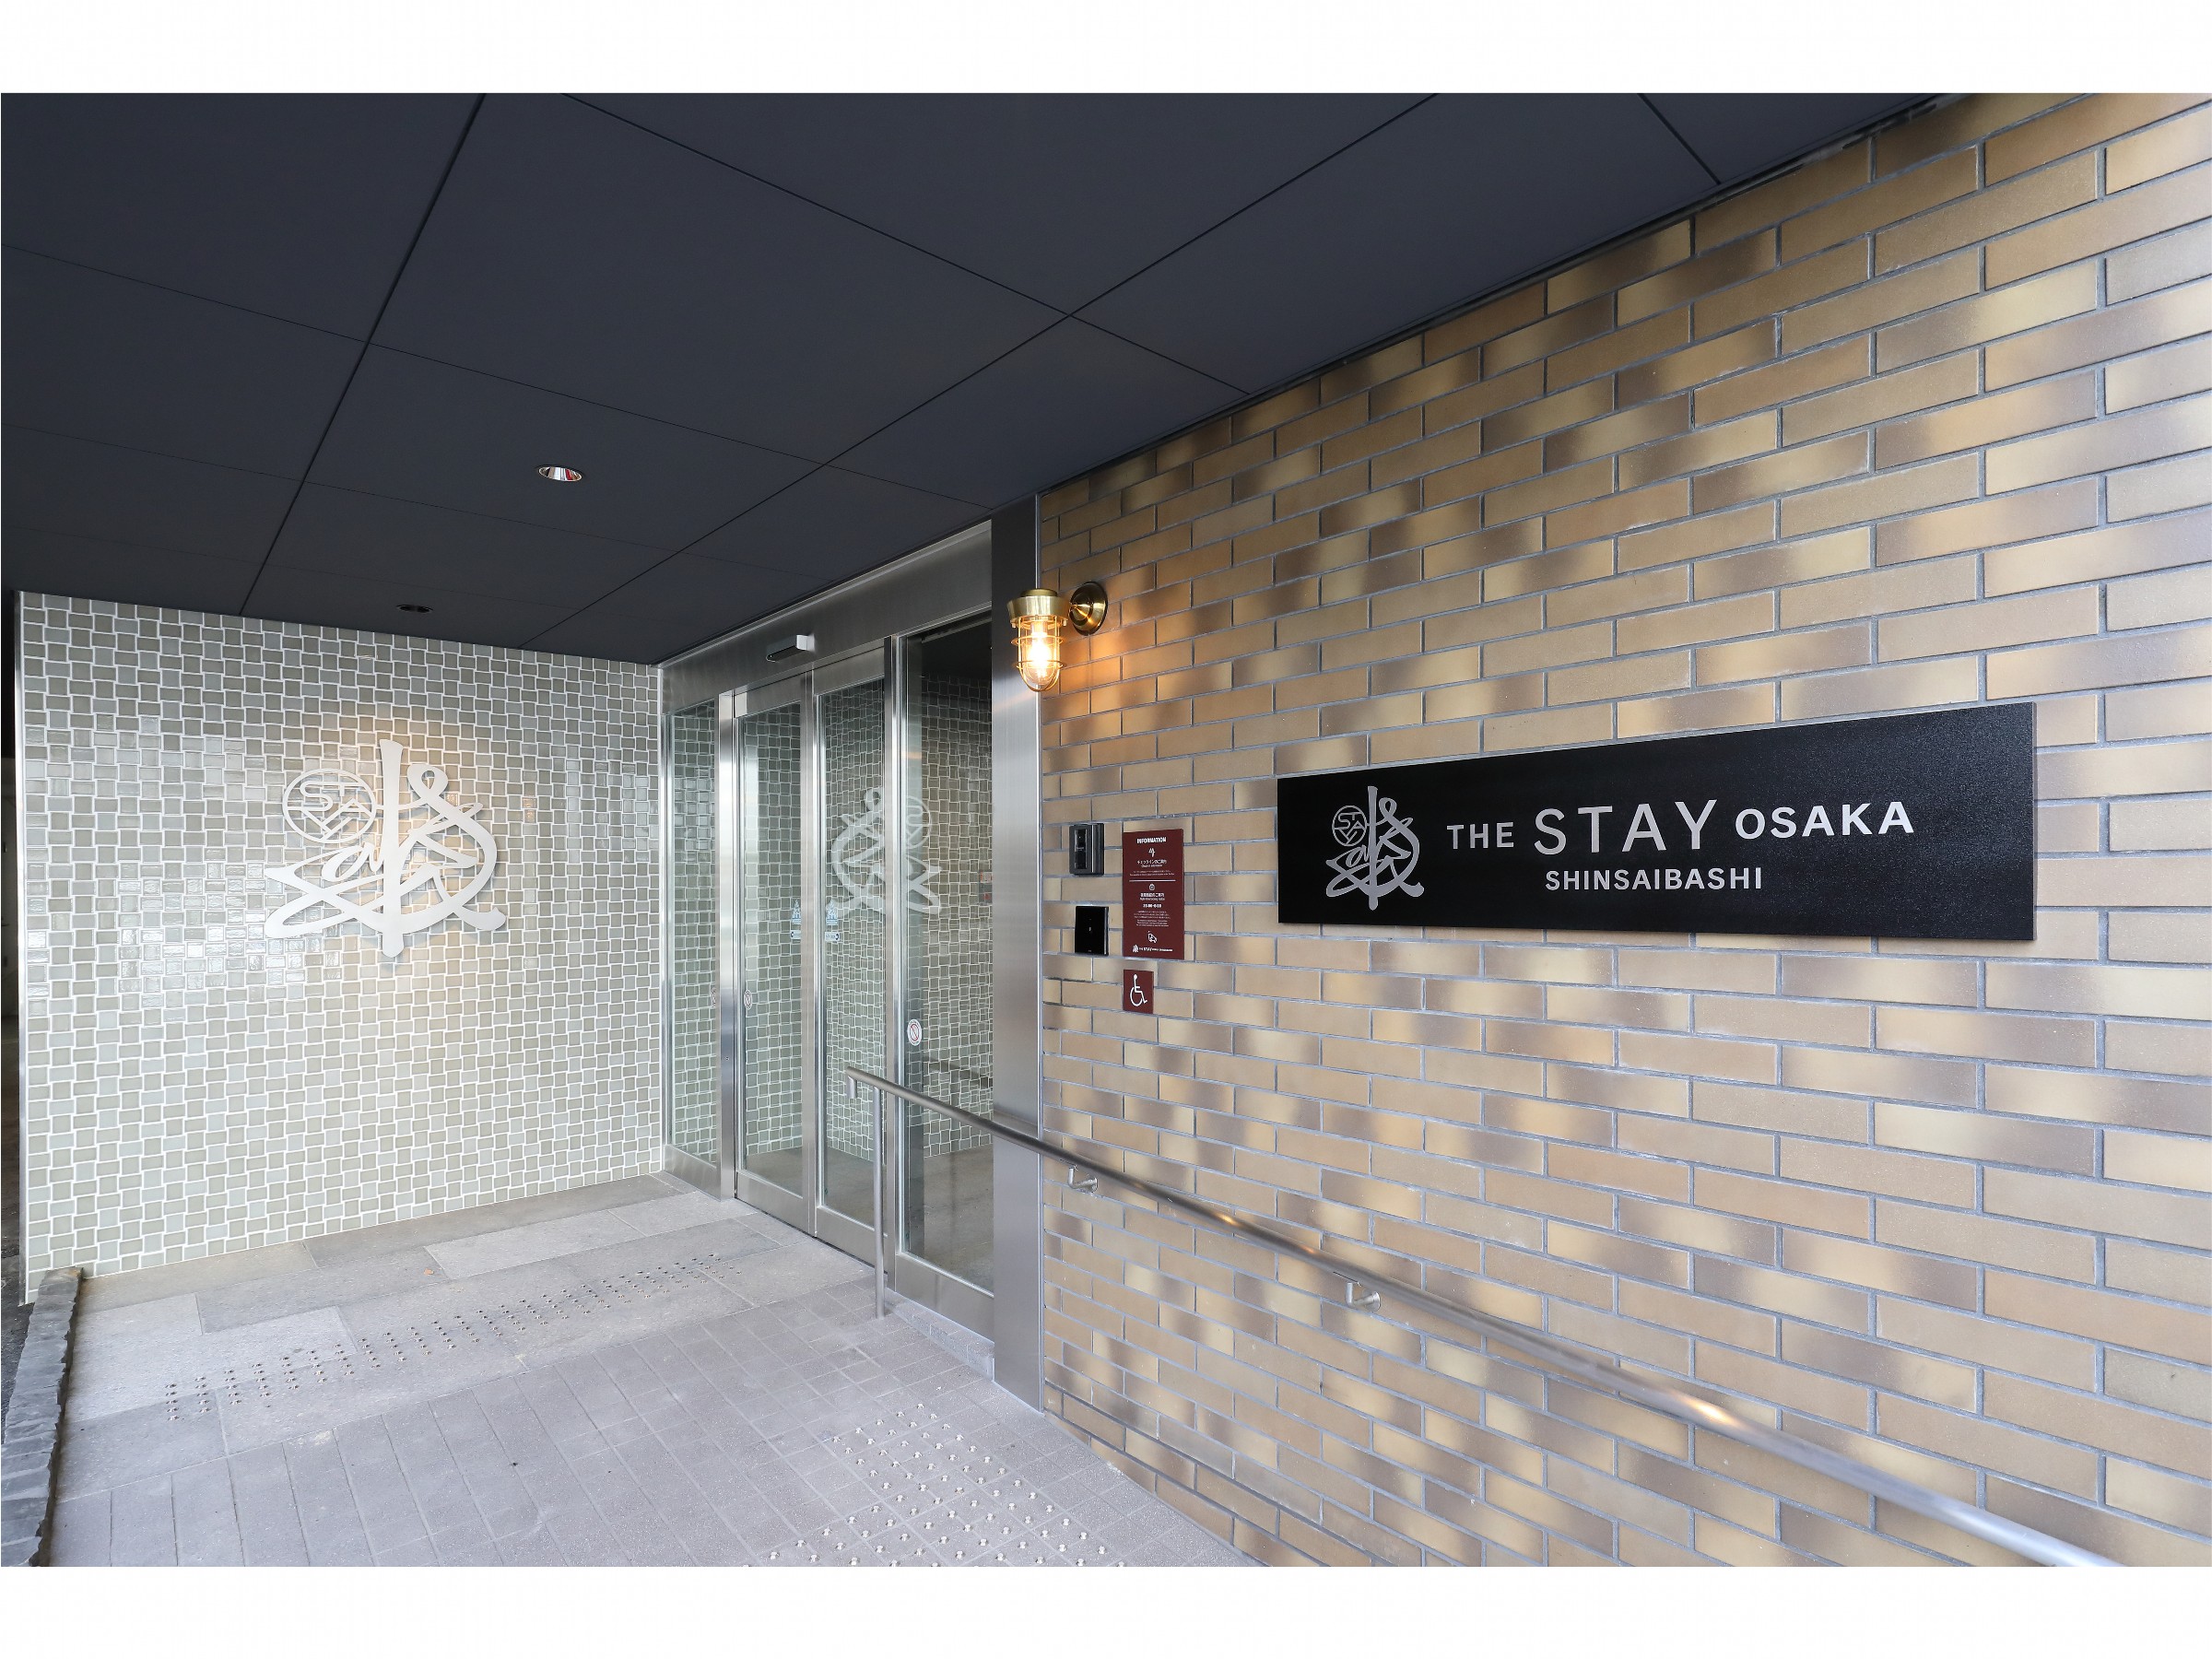 The Stay Osaka 心斎橋